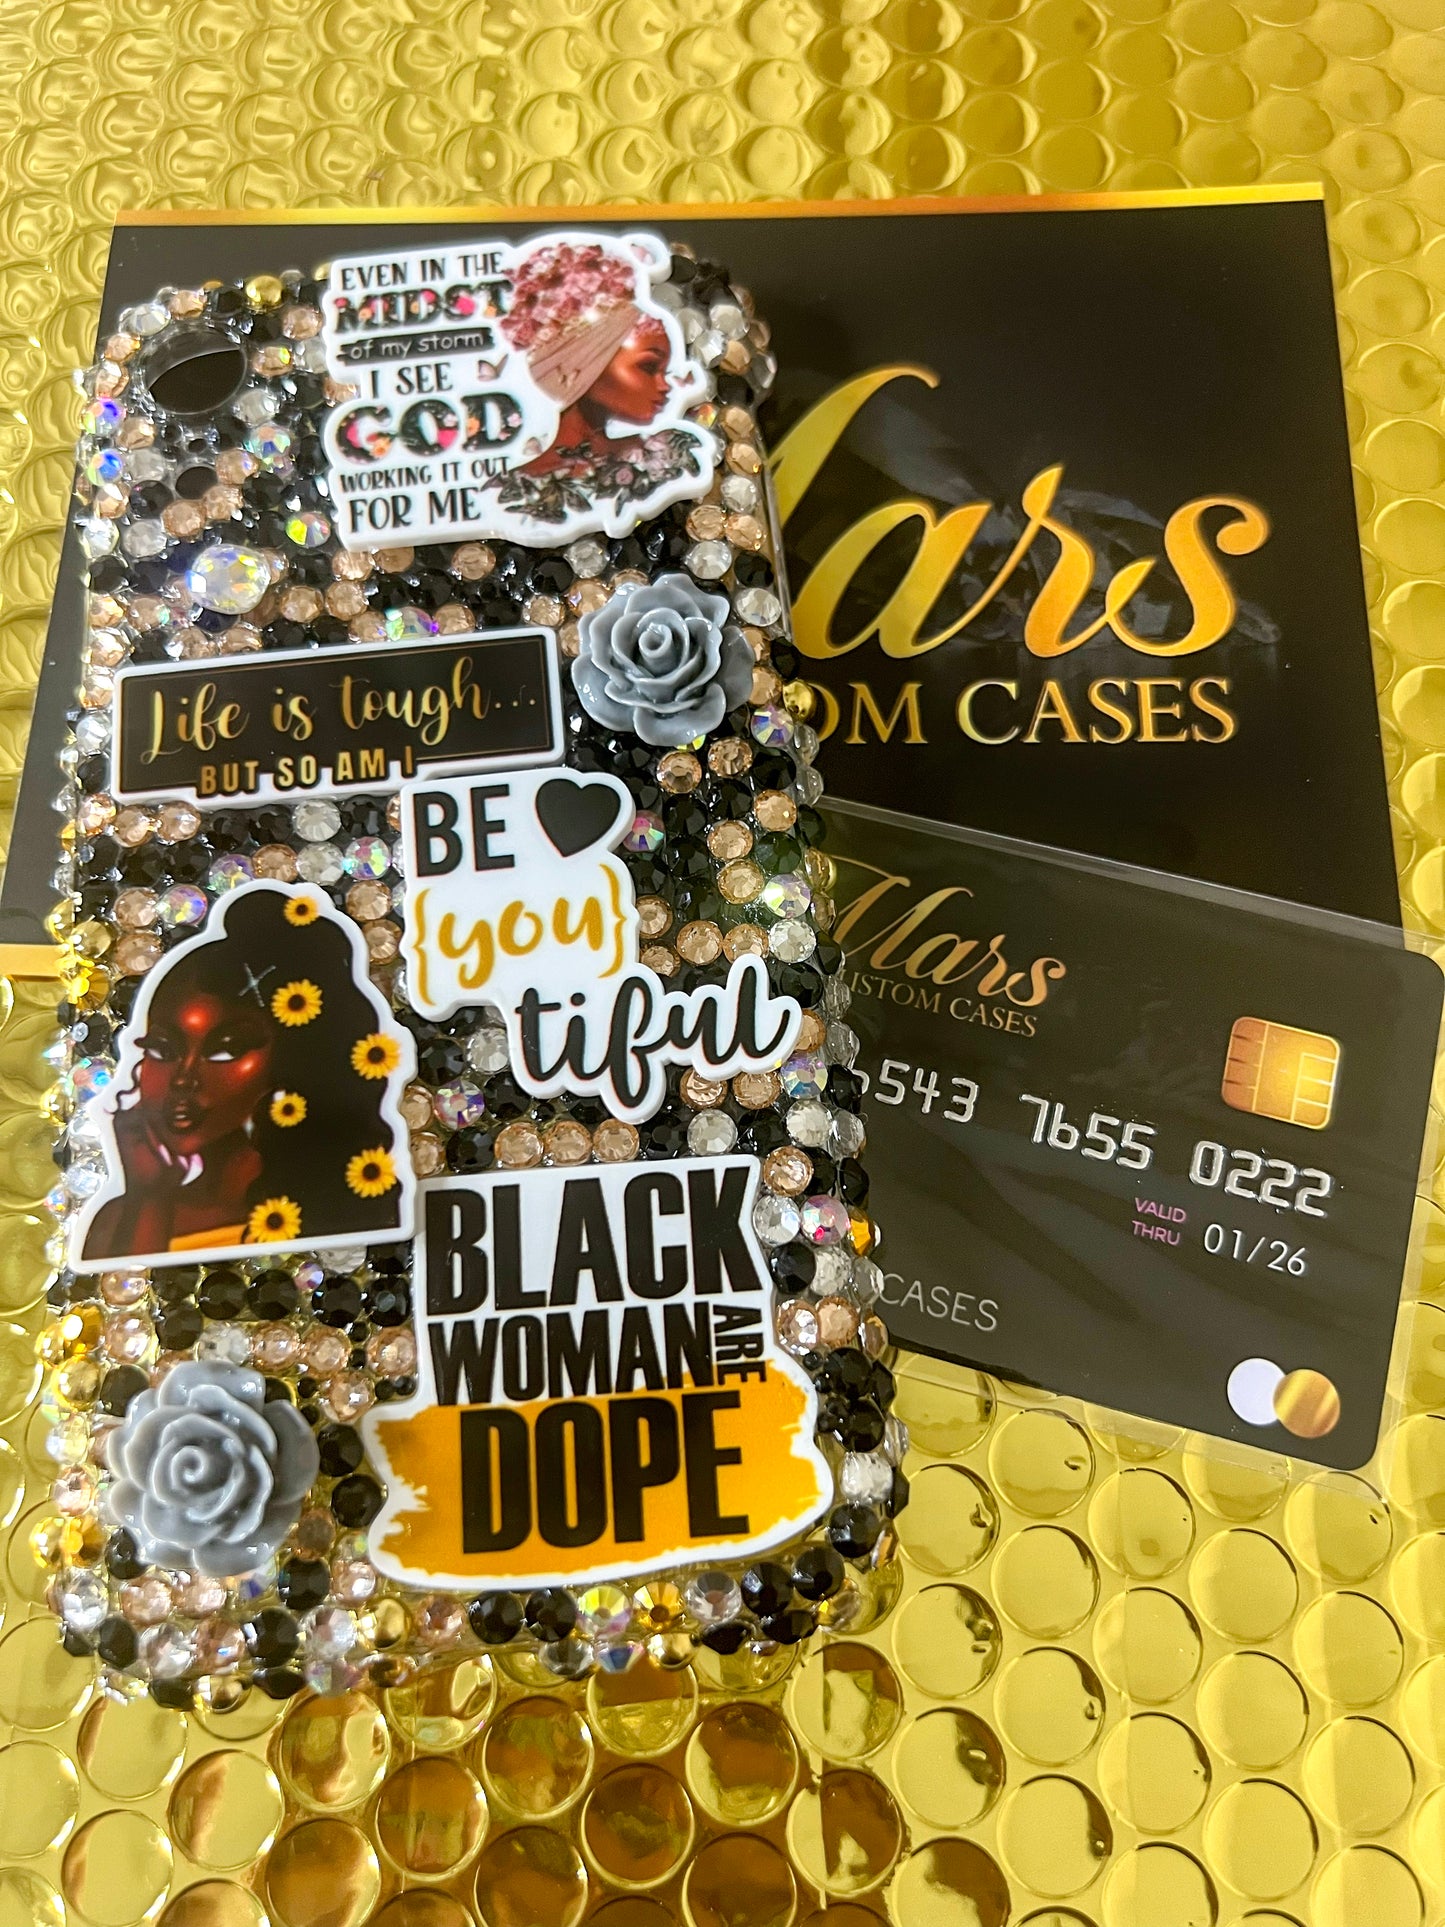 Black Girl Magic Phone Case Pre Order